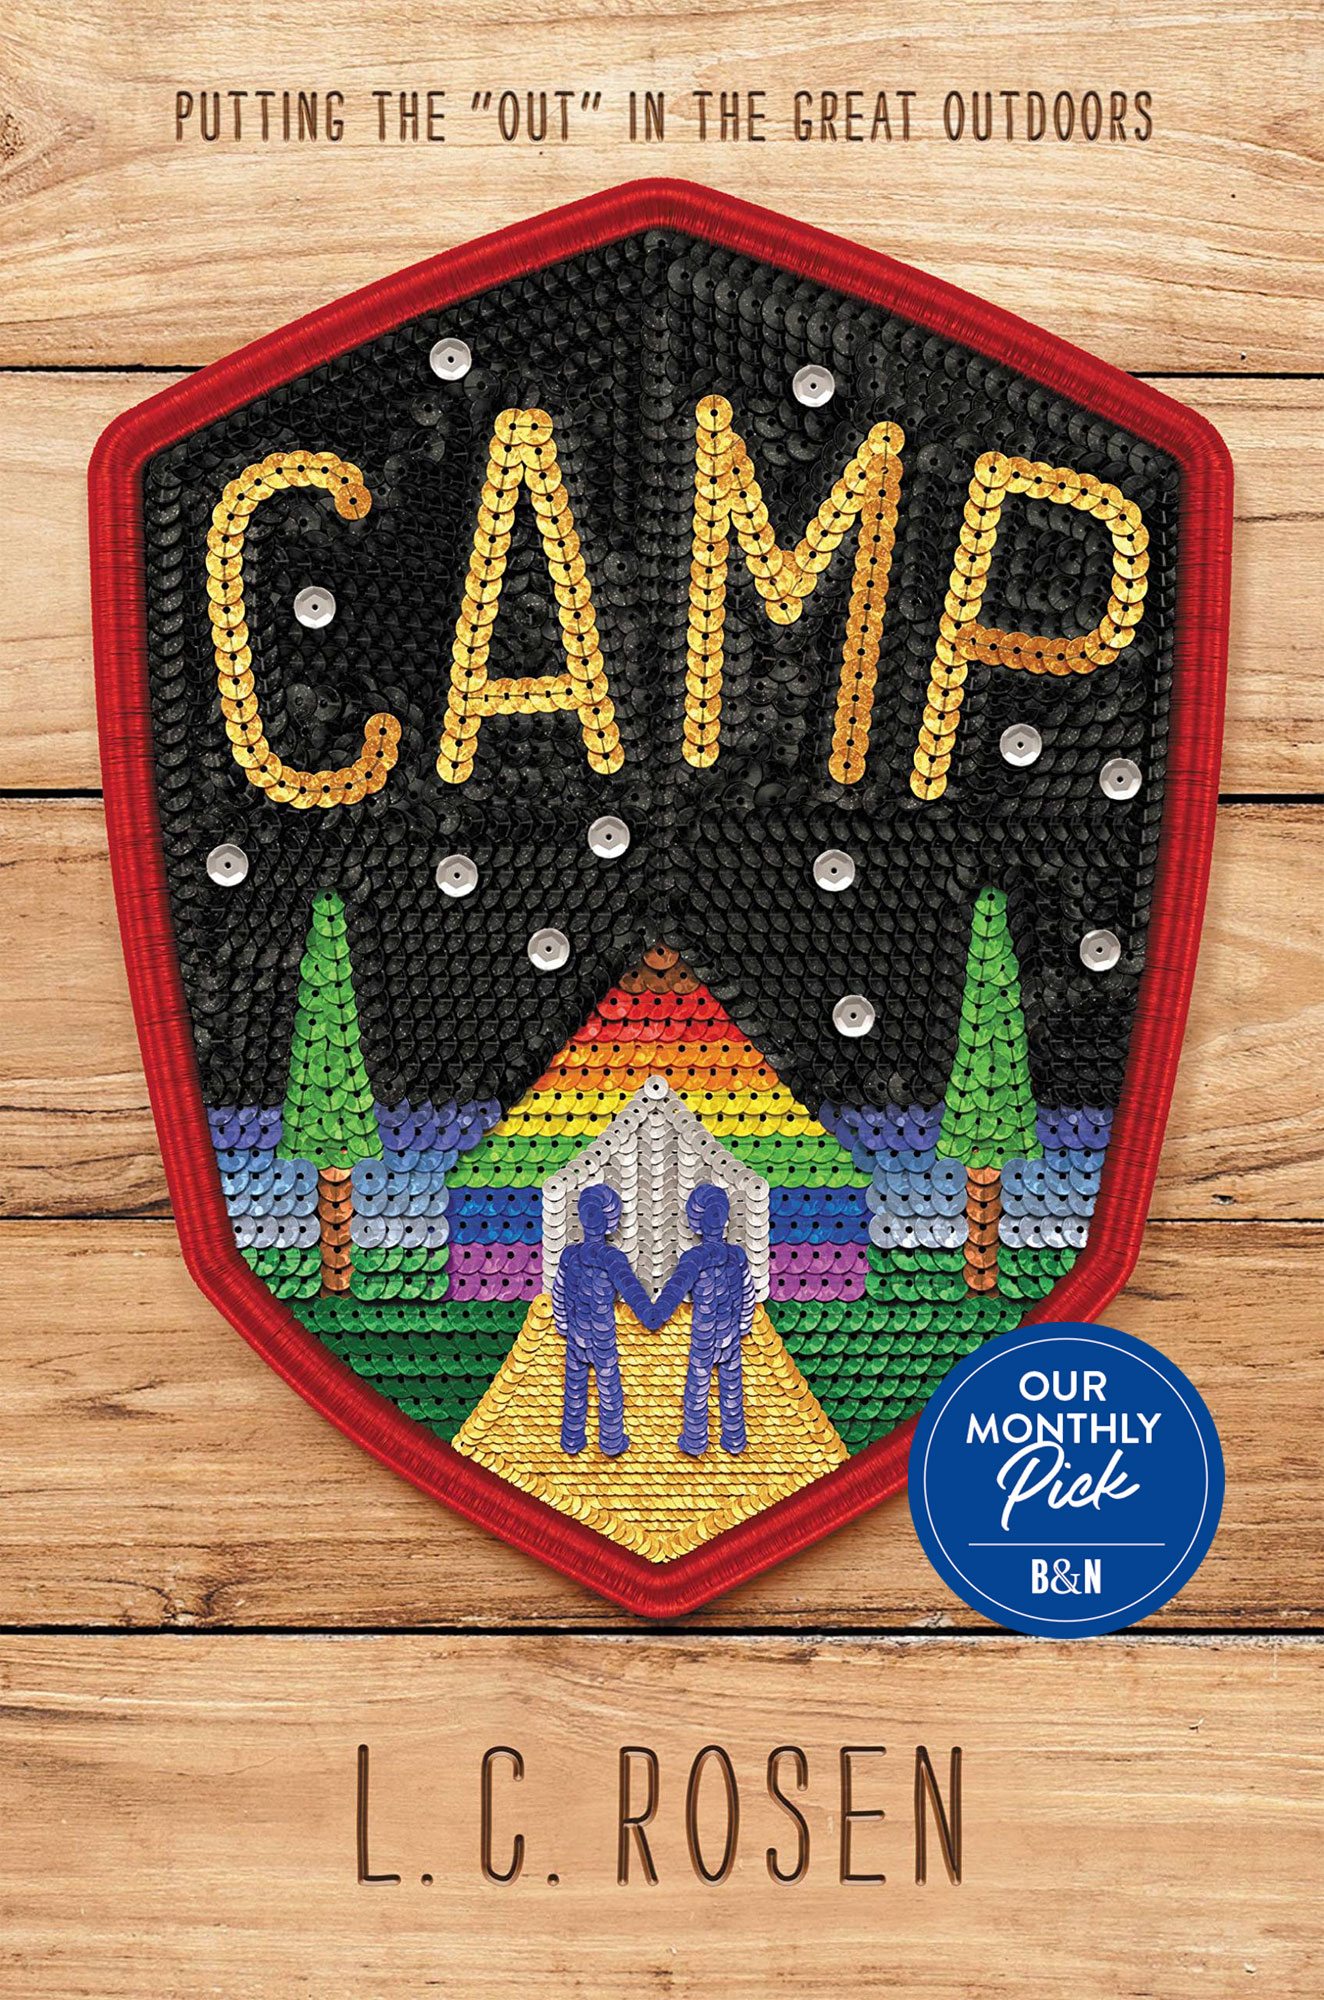 BOOK | Camp by L. C. Rosen